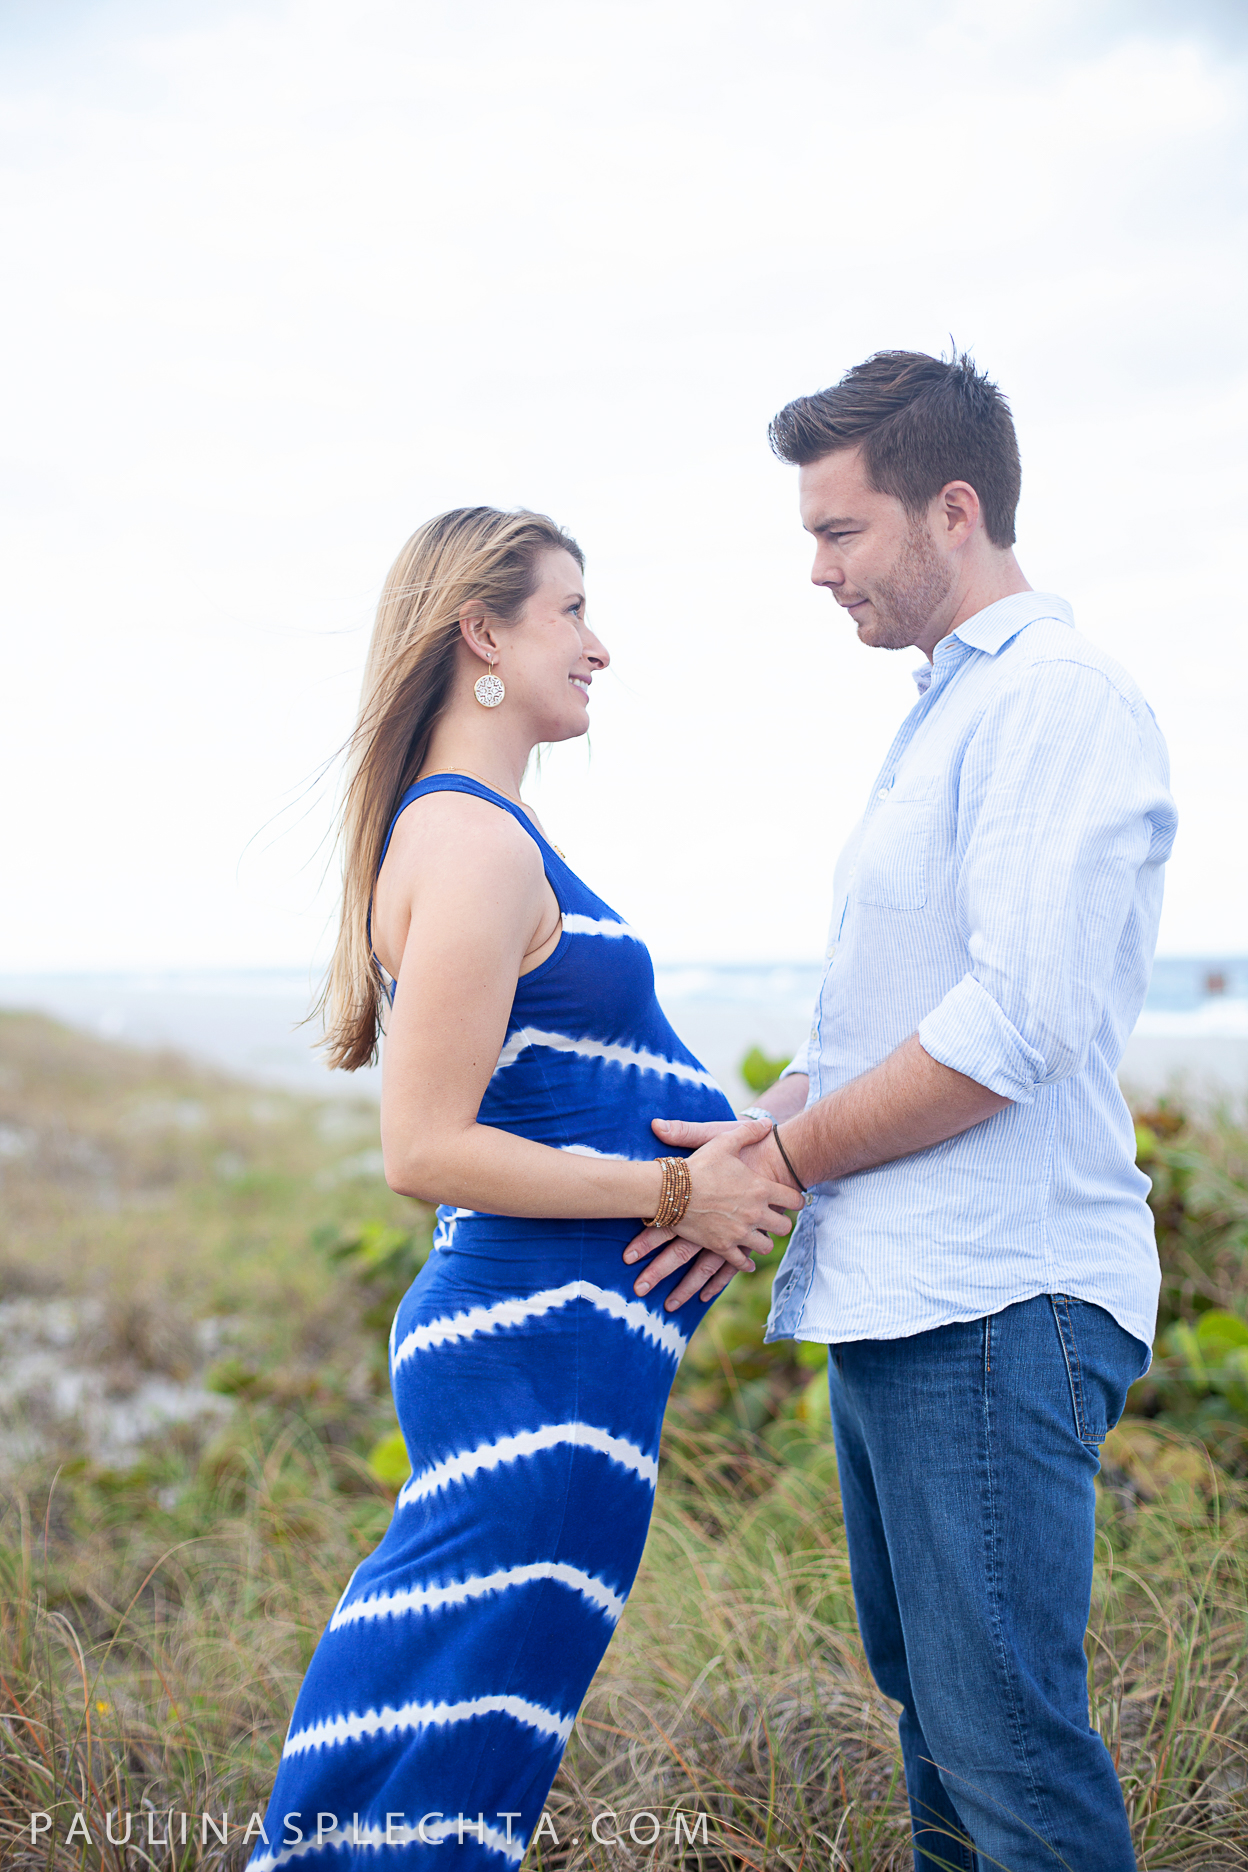 boca-raton-maternity-photographer-pregnancy-photos-shoot-ft-lauderdale-south-florida-gown-dress-newborn-west-palm-beach-delray-15.jpg